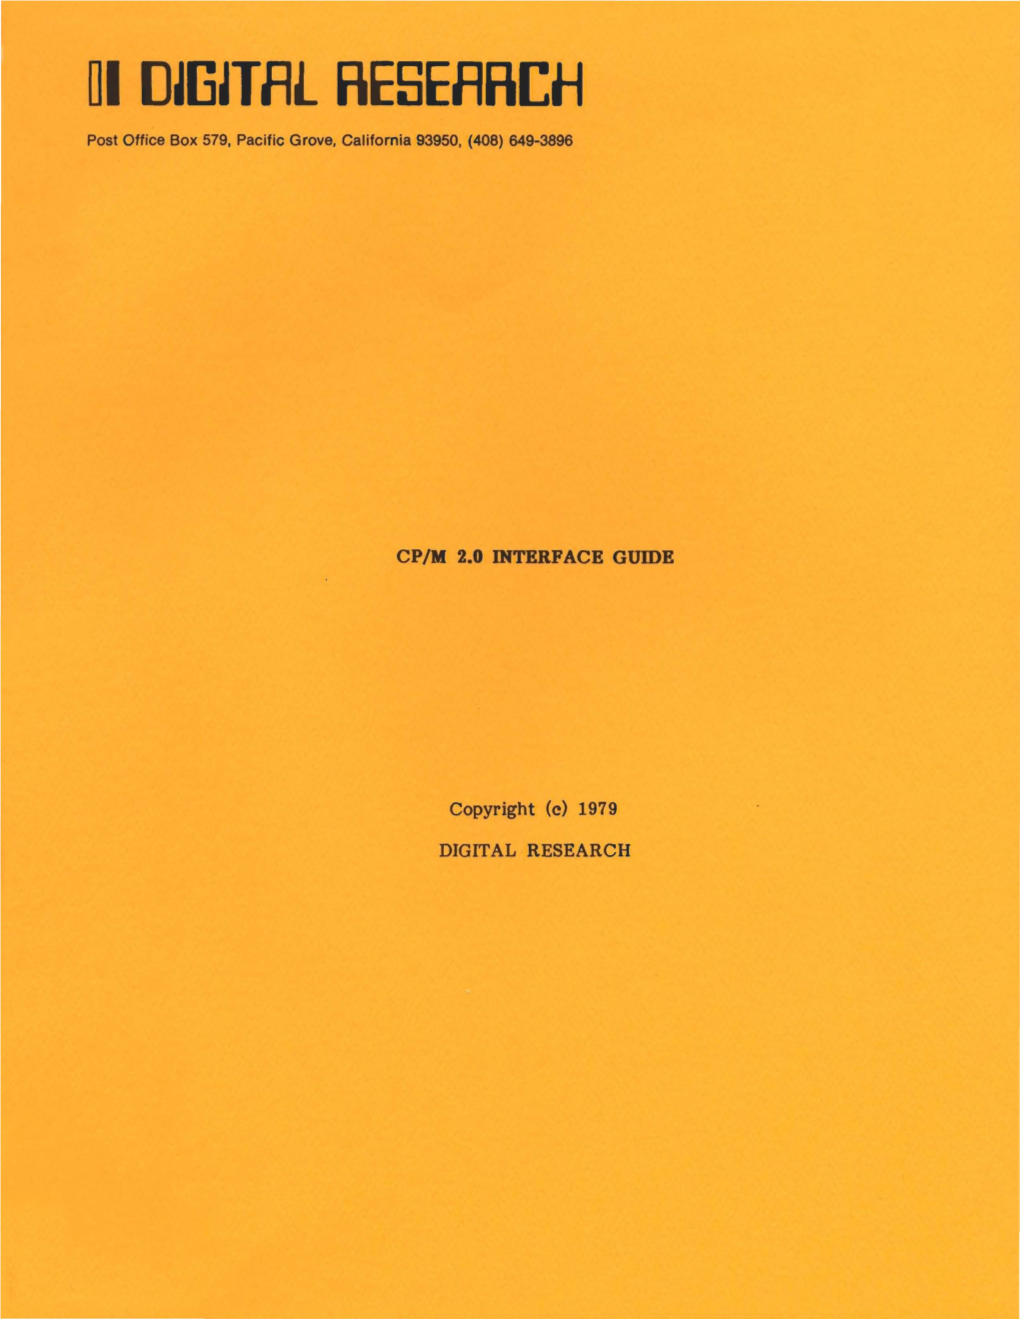 CP/M 2.0 INTERFACE GUIDE, Digital Research, 1979